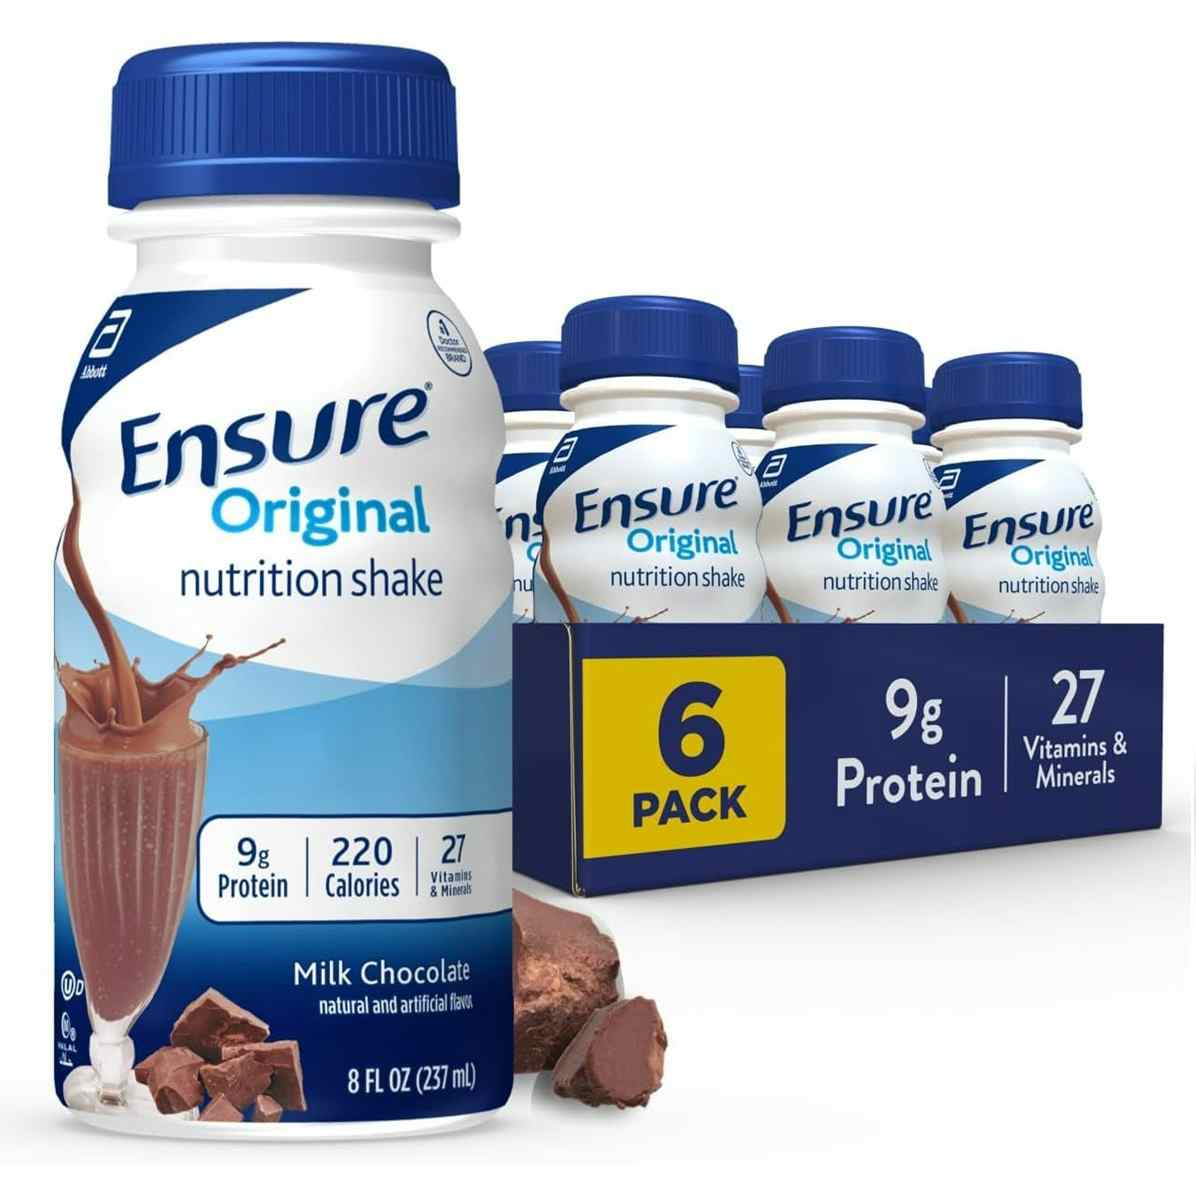 Ensure Original Nutritional Shake